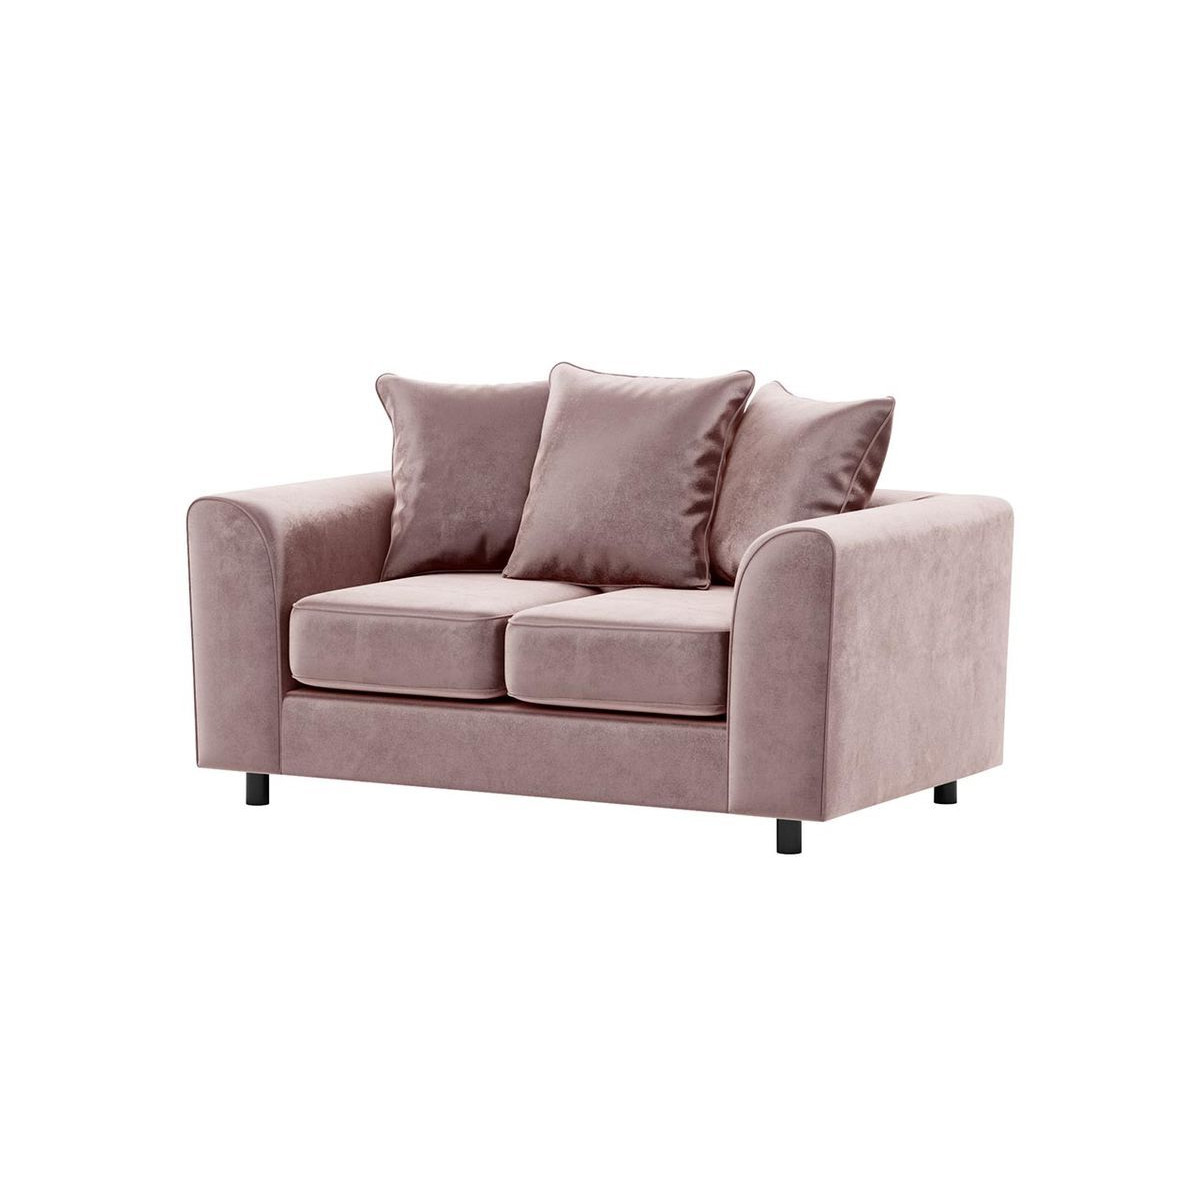 Dillon Velvet 2 Seater Sofa Bed, pastel pink - image 1